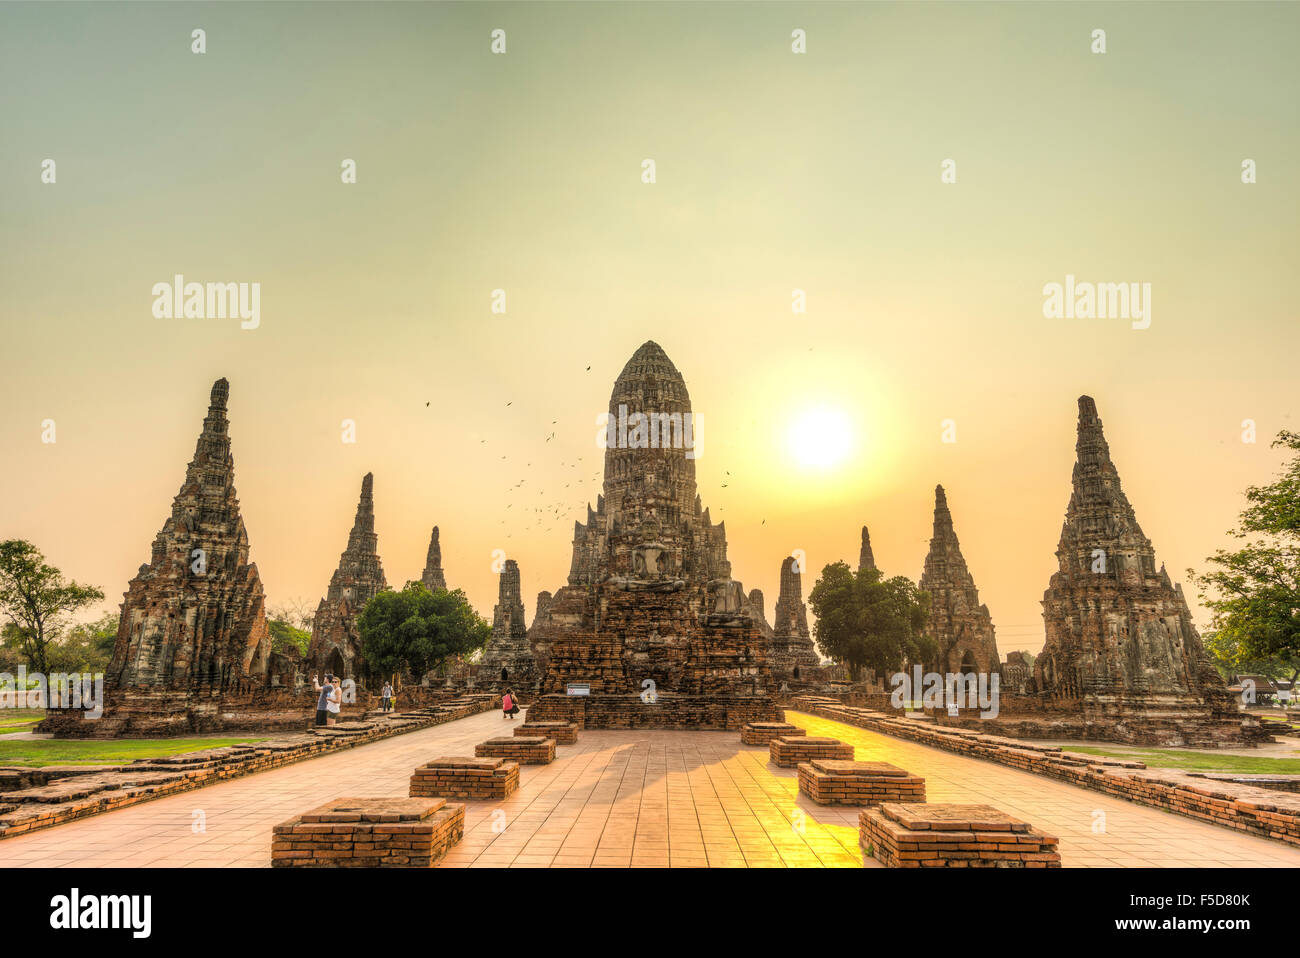 Buddhist temple at sunset, Wat Chaiwatthanaram, Ayutthaya, Thailand Stock Photo